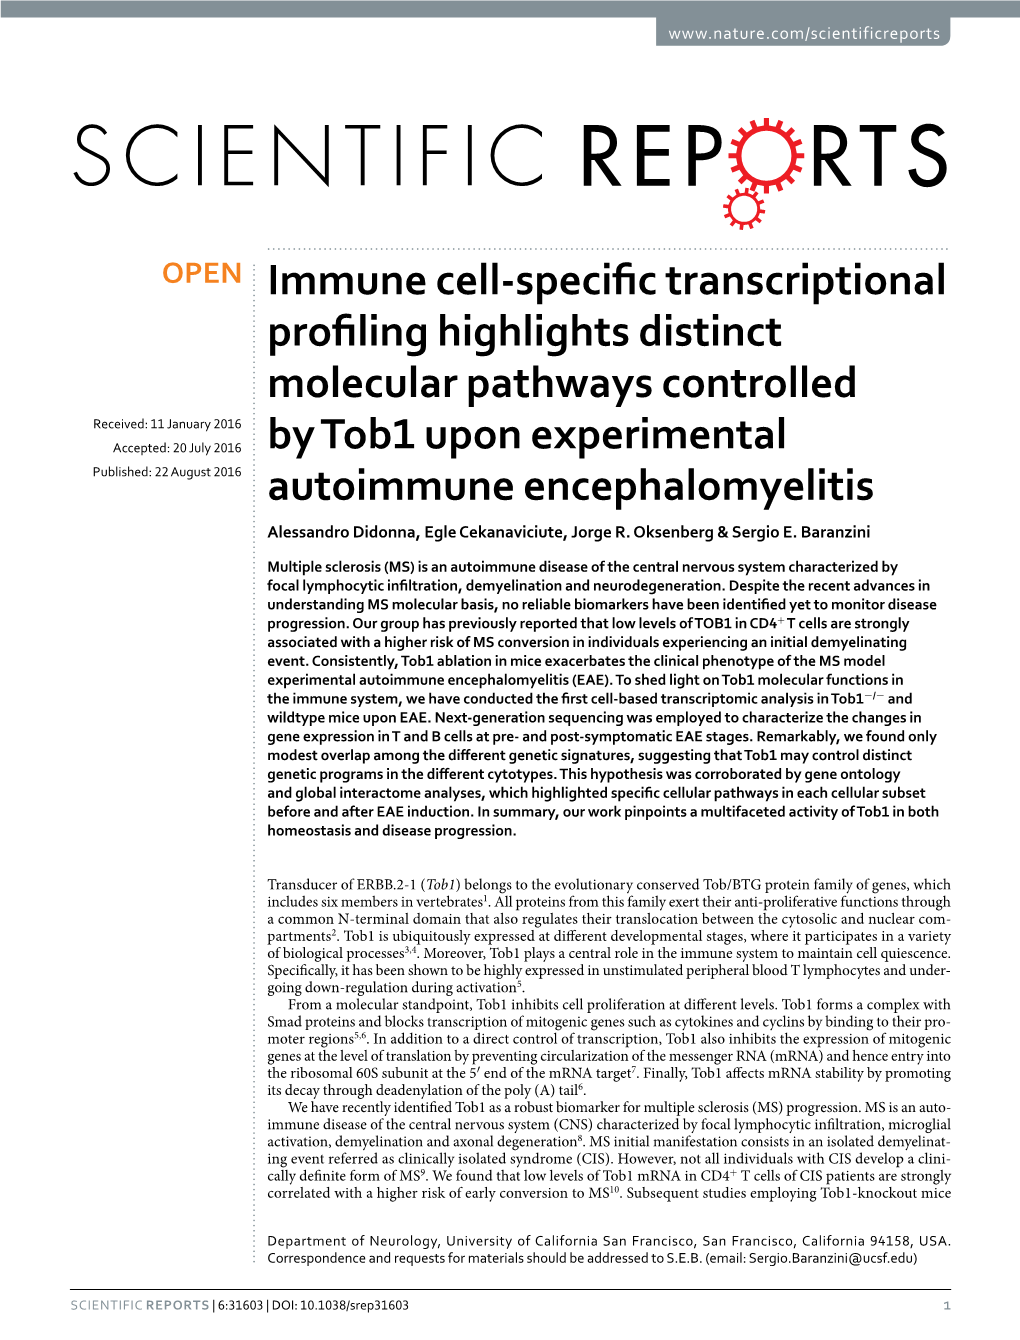 Immune Cell-Specific Transcriptional Profiling Highlights Distinct